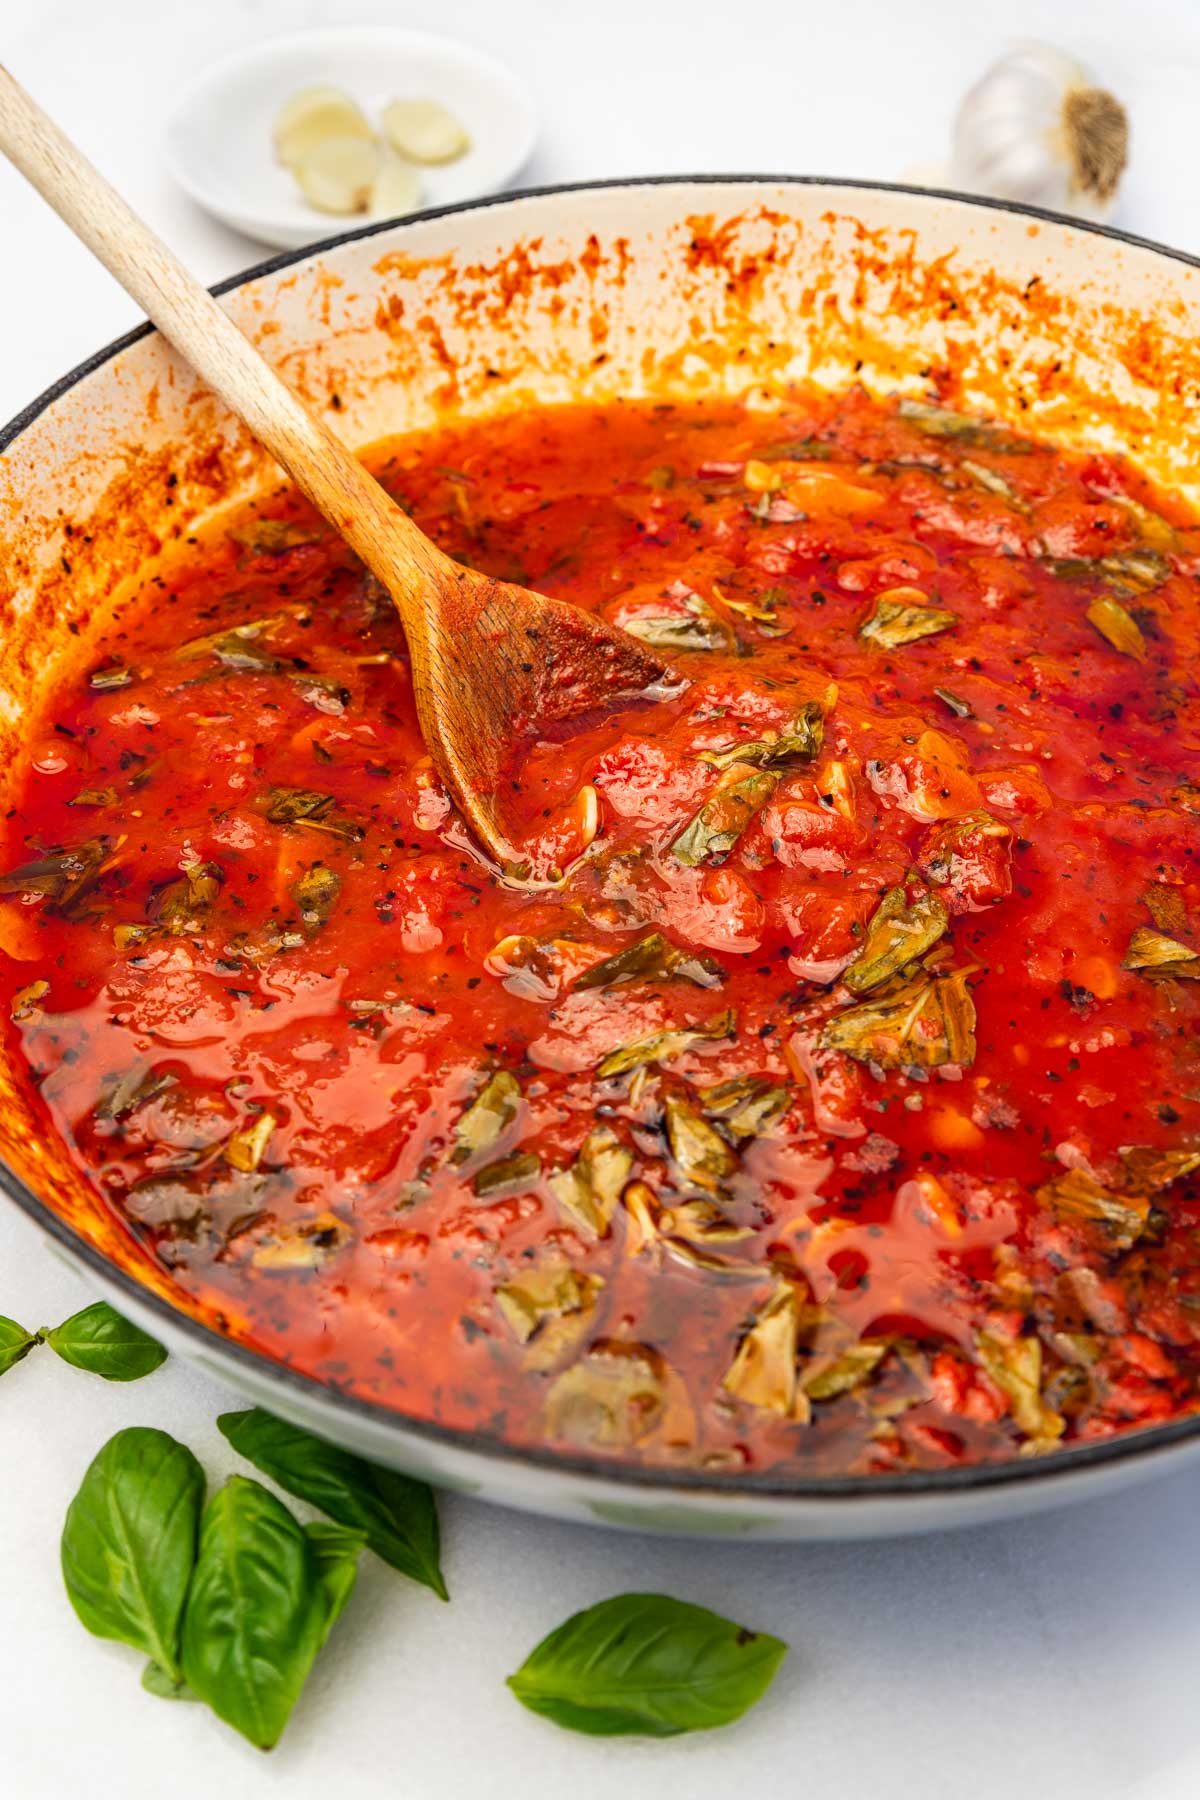 Closeup of a pan of homemade Italian marinara sauce with wooden spoon.